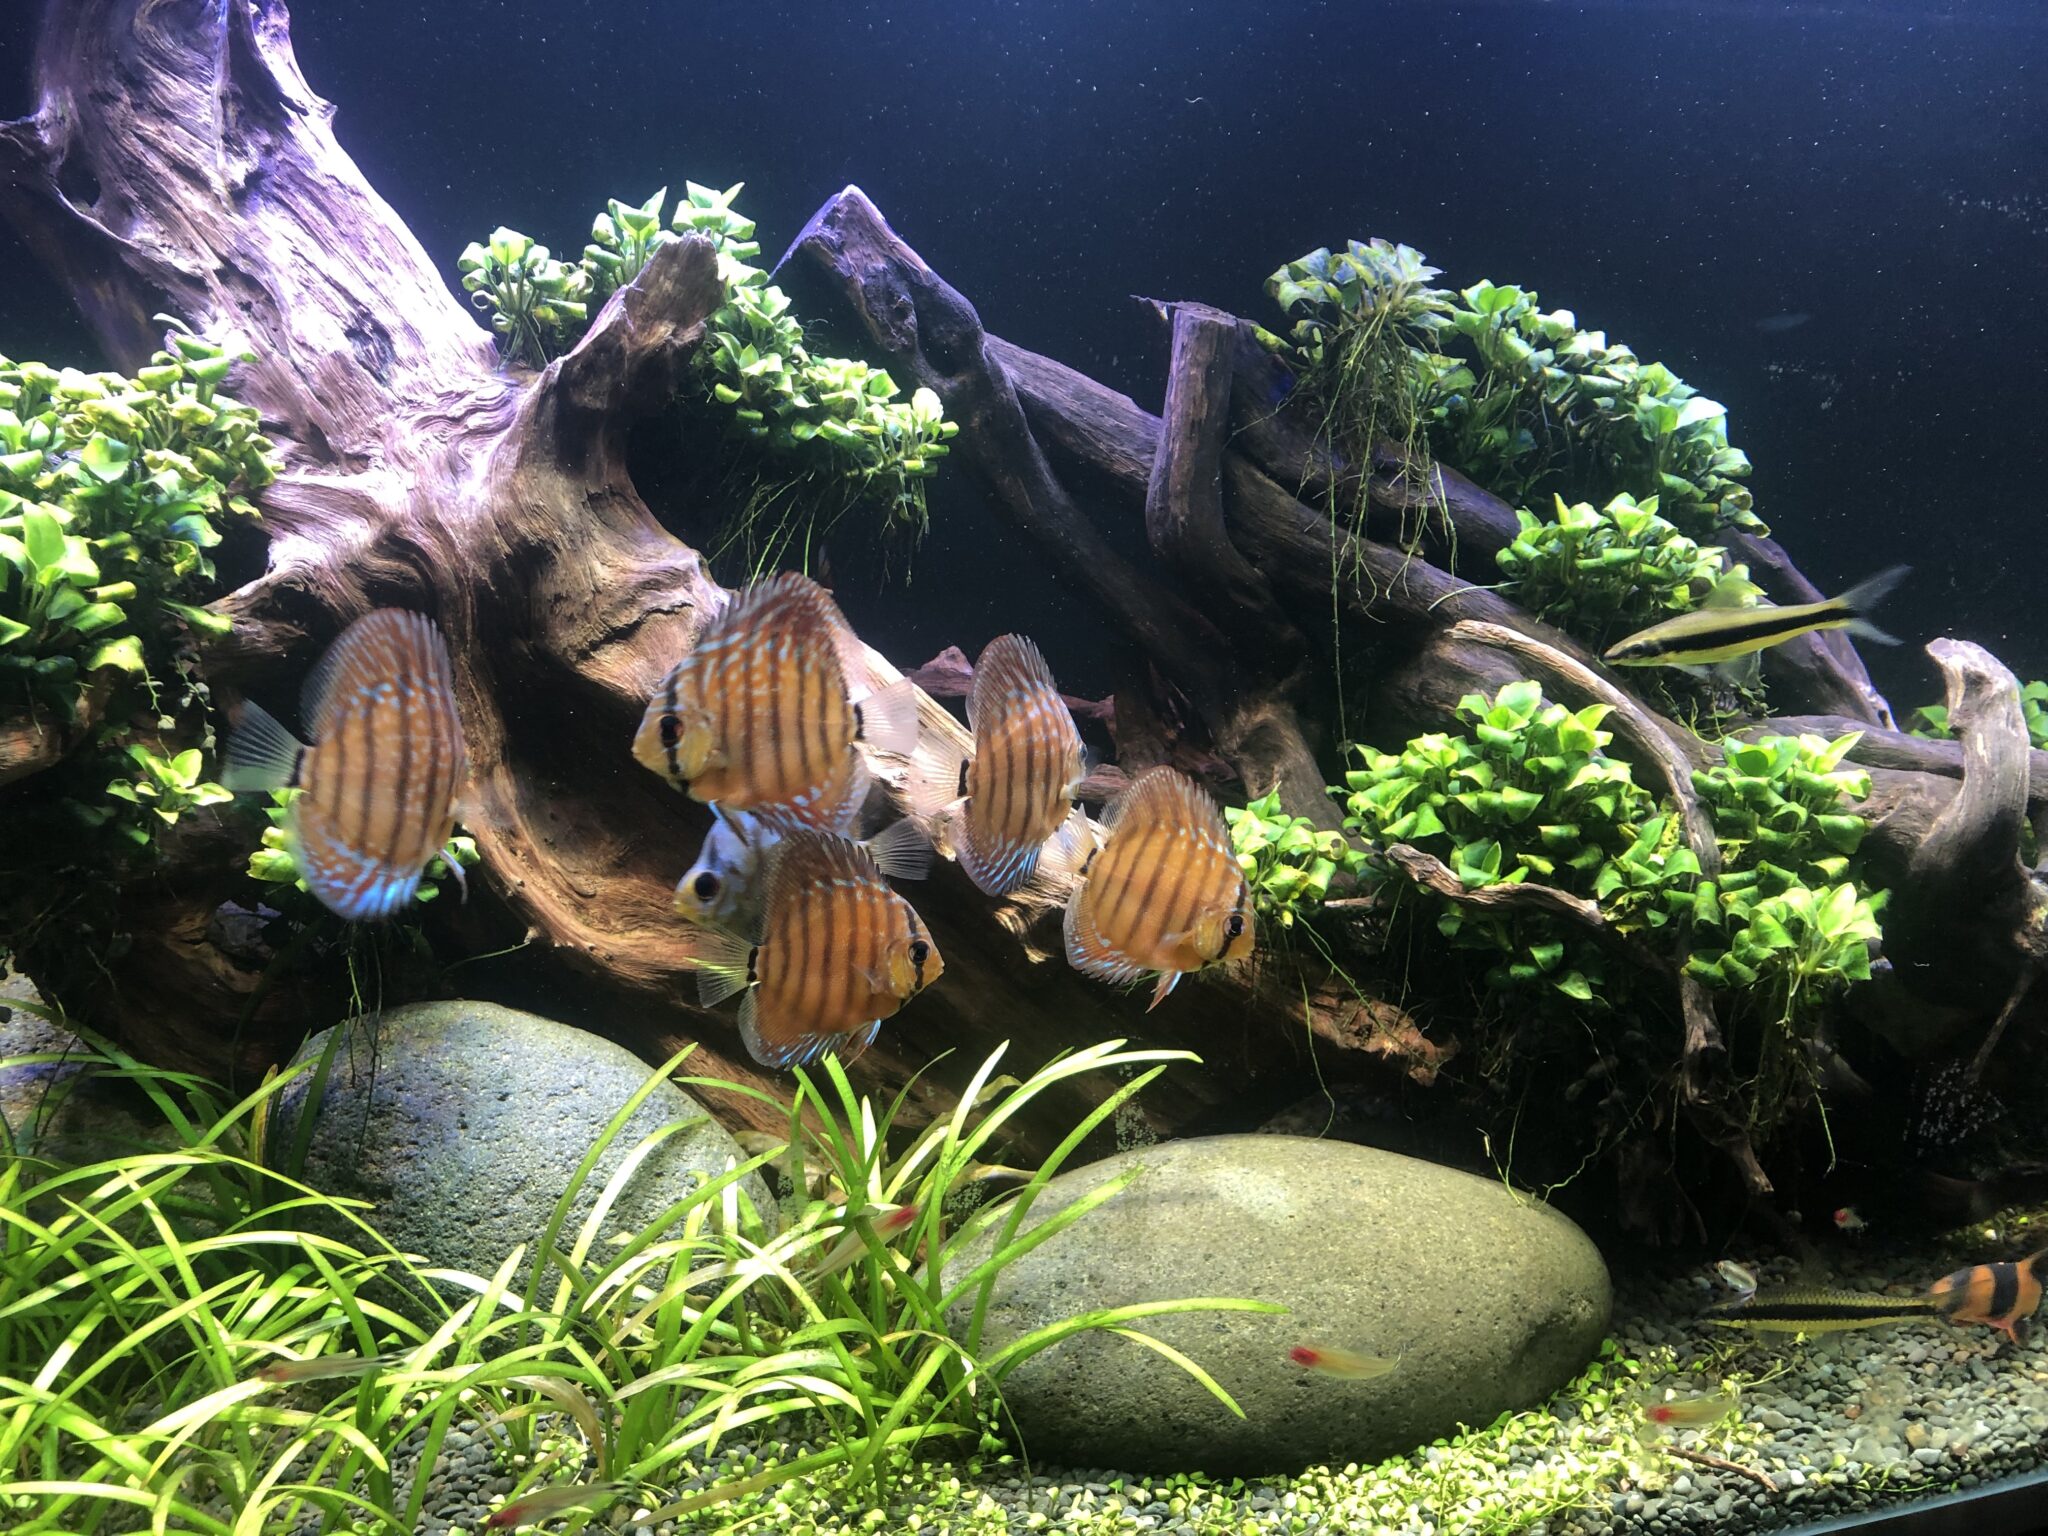 Freshwater Aquariums, Freshwater Fish Tanks - Custom Aquariums